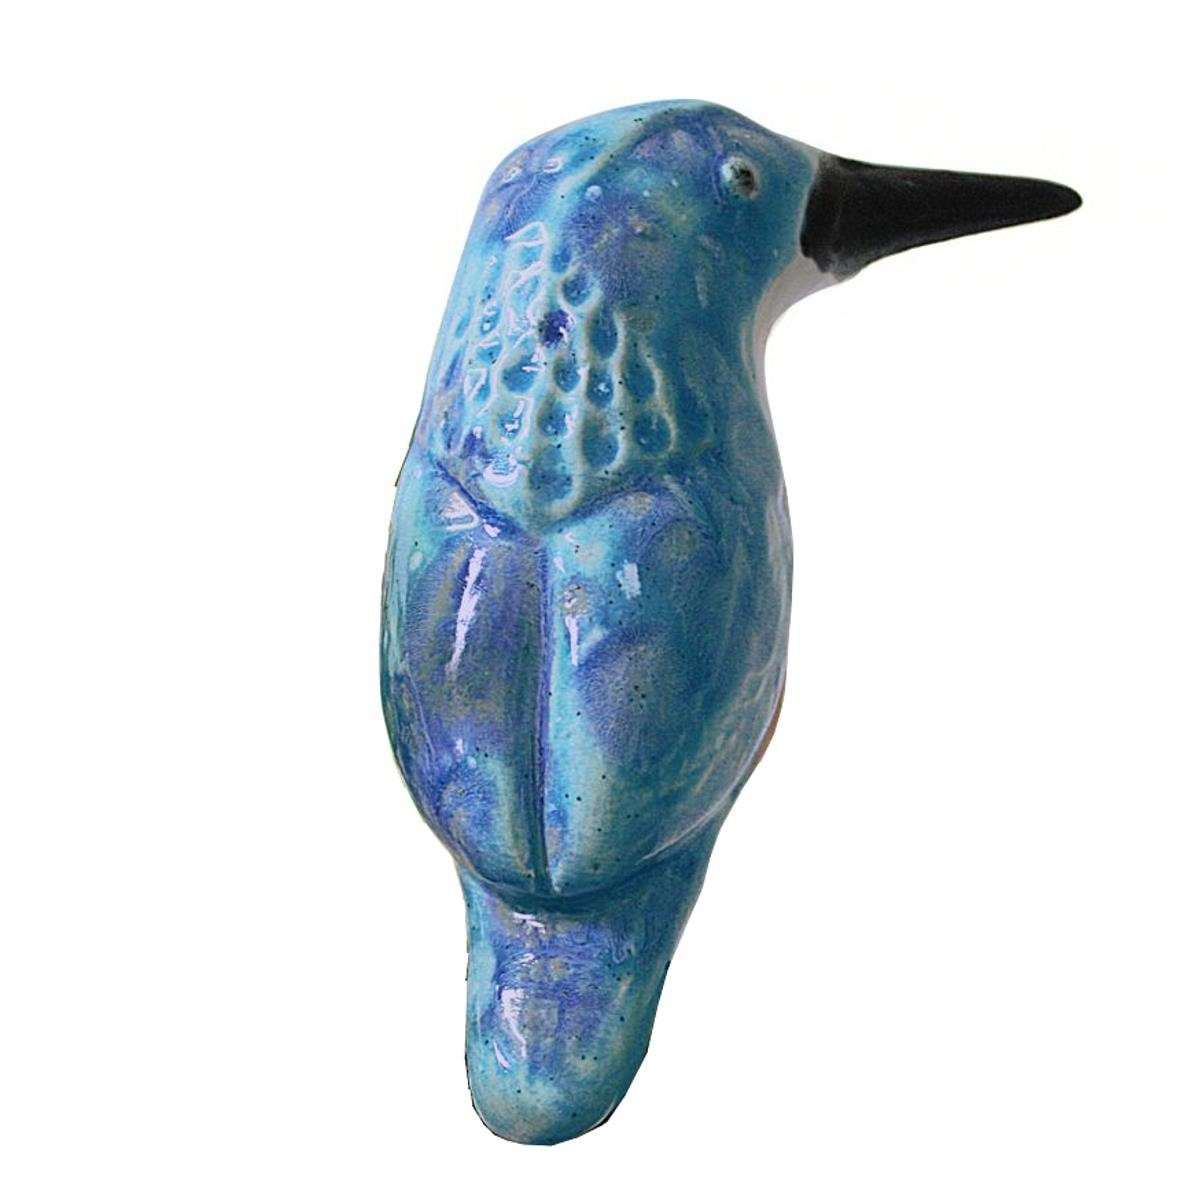 Tangoo Gartenfigur Tangoo Keramik-Eis-Vogel türkis, gepunktet Ast, Stab blau (Stück) auf mit